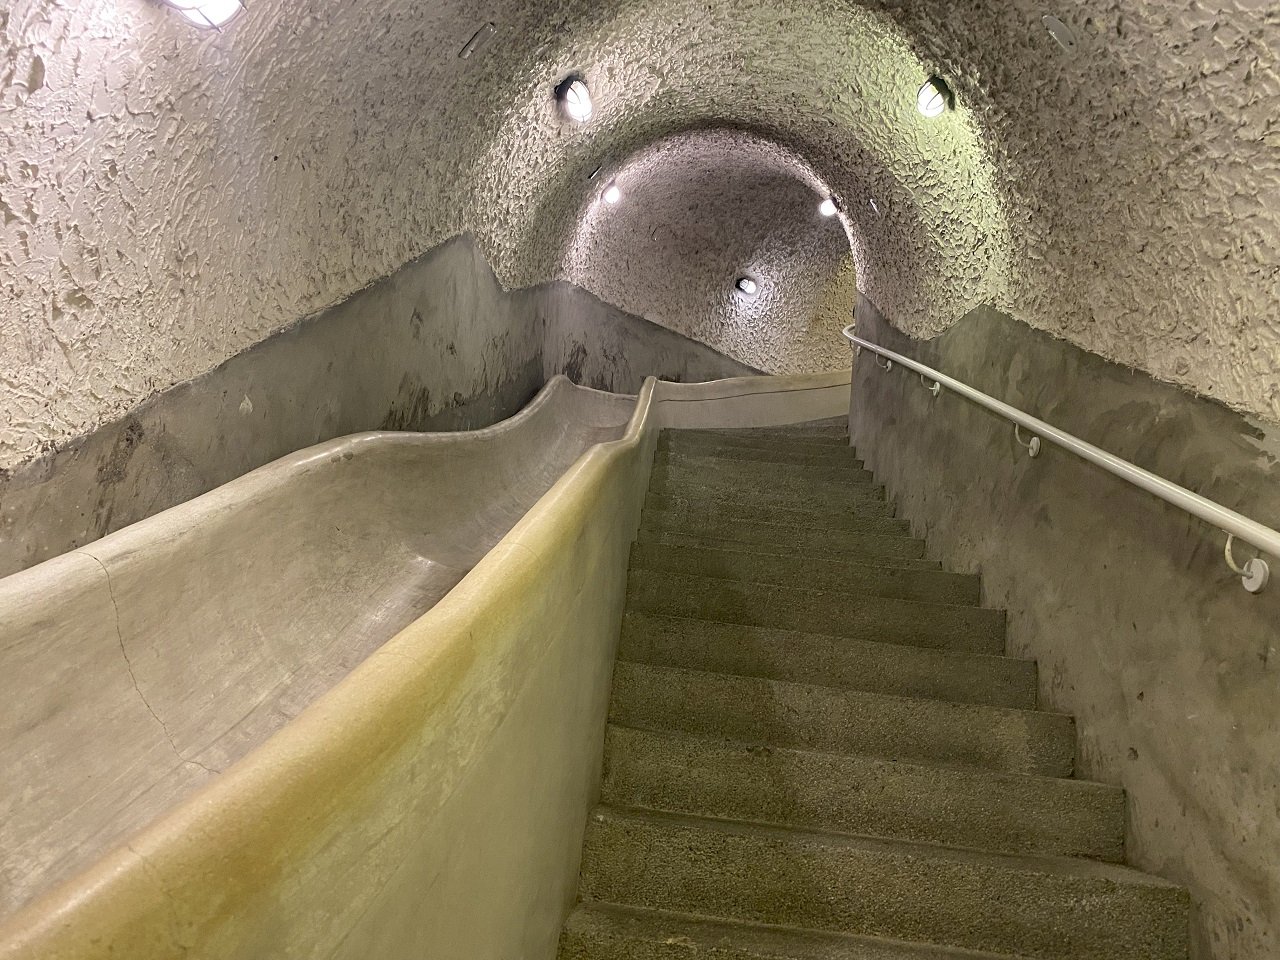 Grand Hotel opens second secret underground tunnel to public